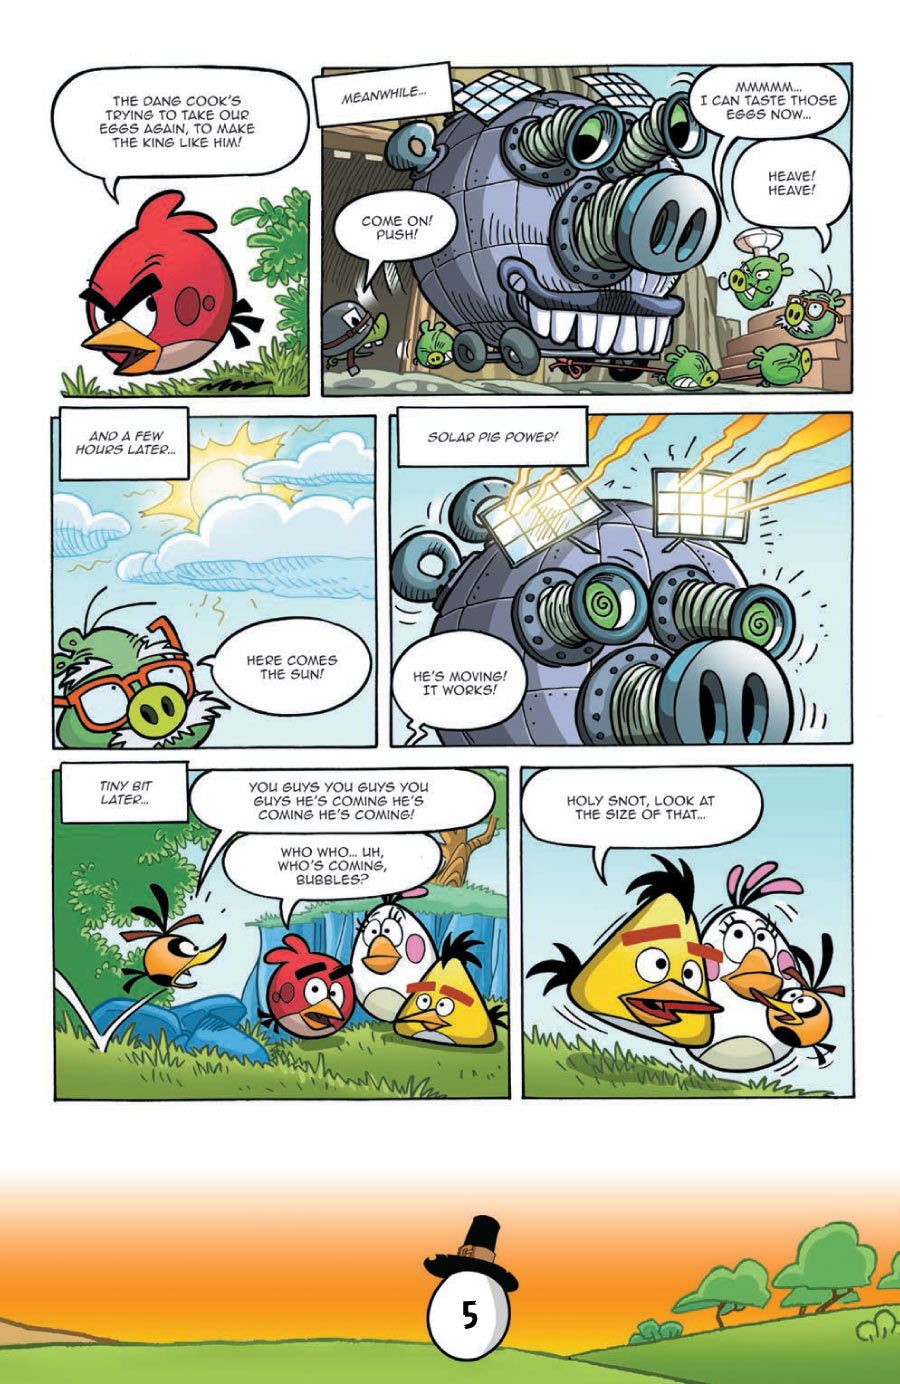 angrybirds_comics_11-pr-7